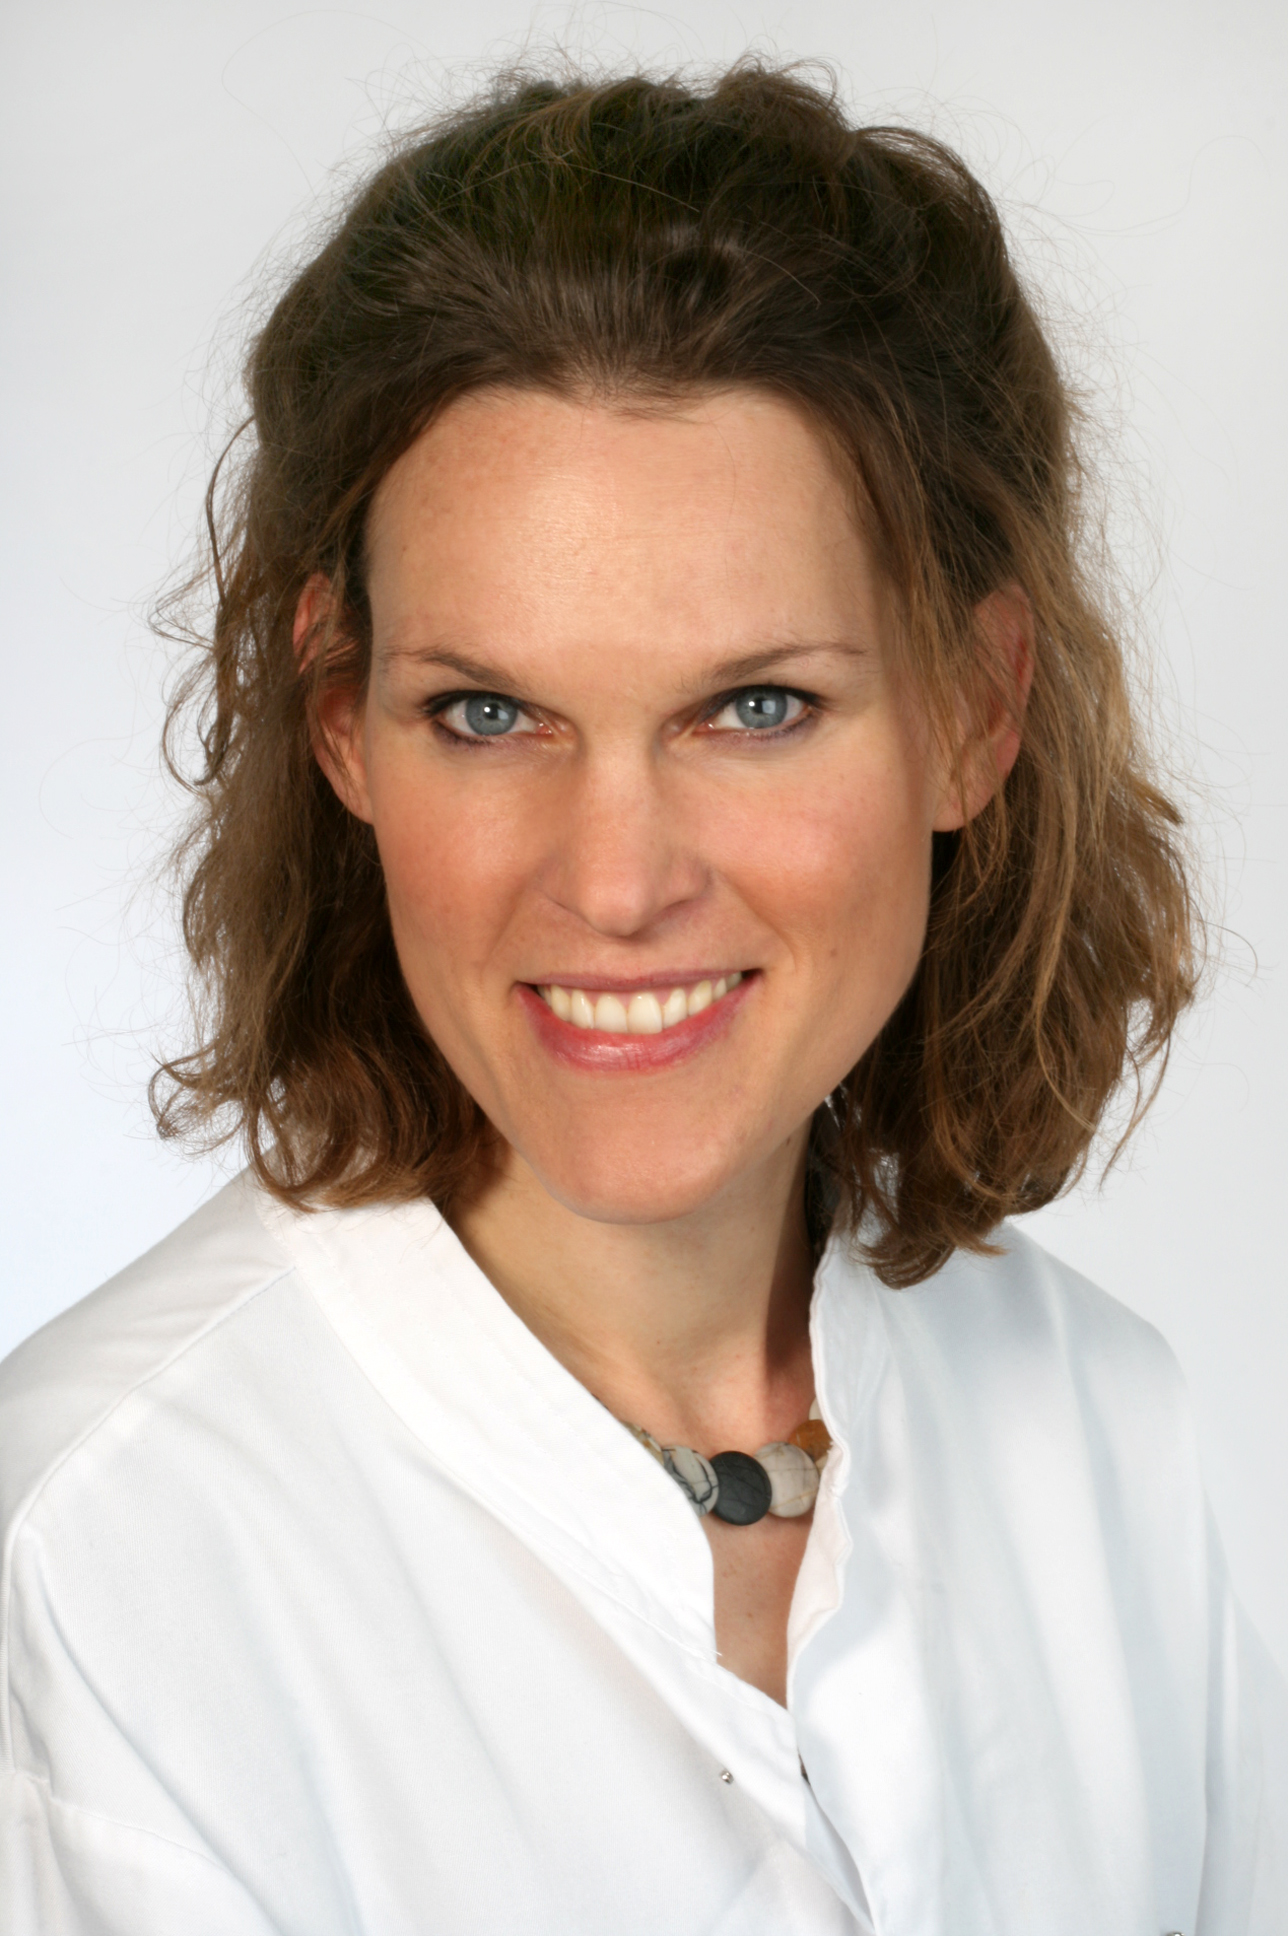 Photo of Dr. Andrea Forschner, Dr. Andrea Forschner, head of the melanoma outpatient clinic at the University Hospital of Tübingen Dermatology Department 